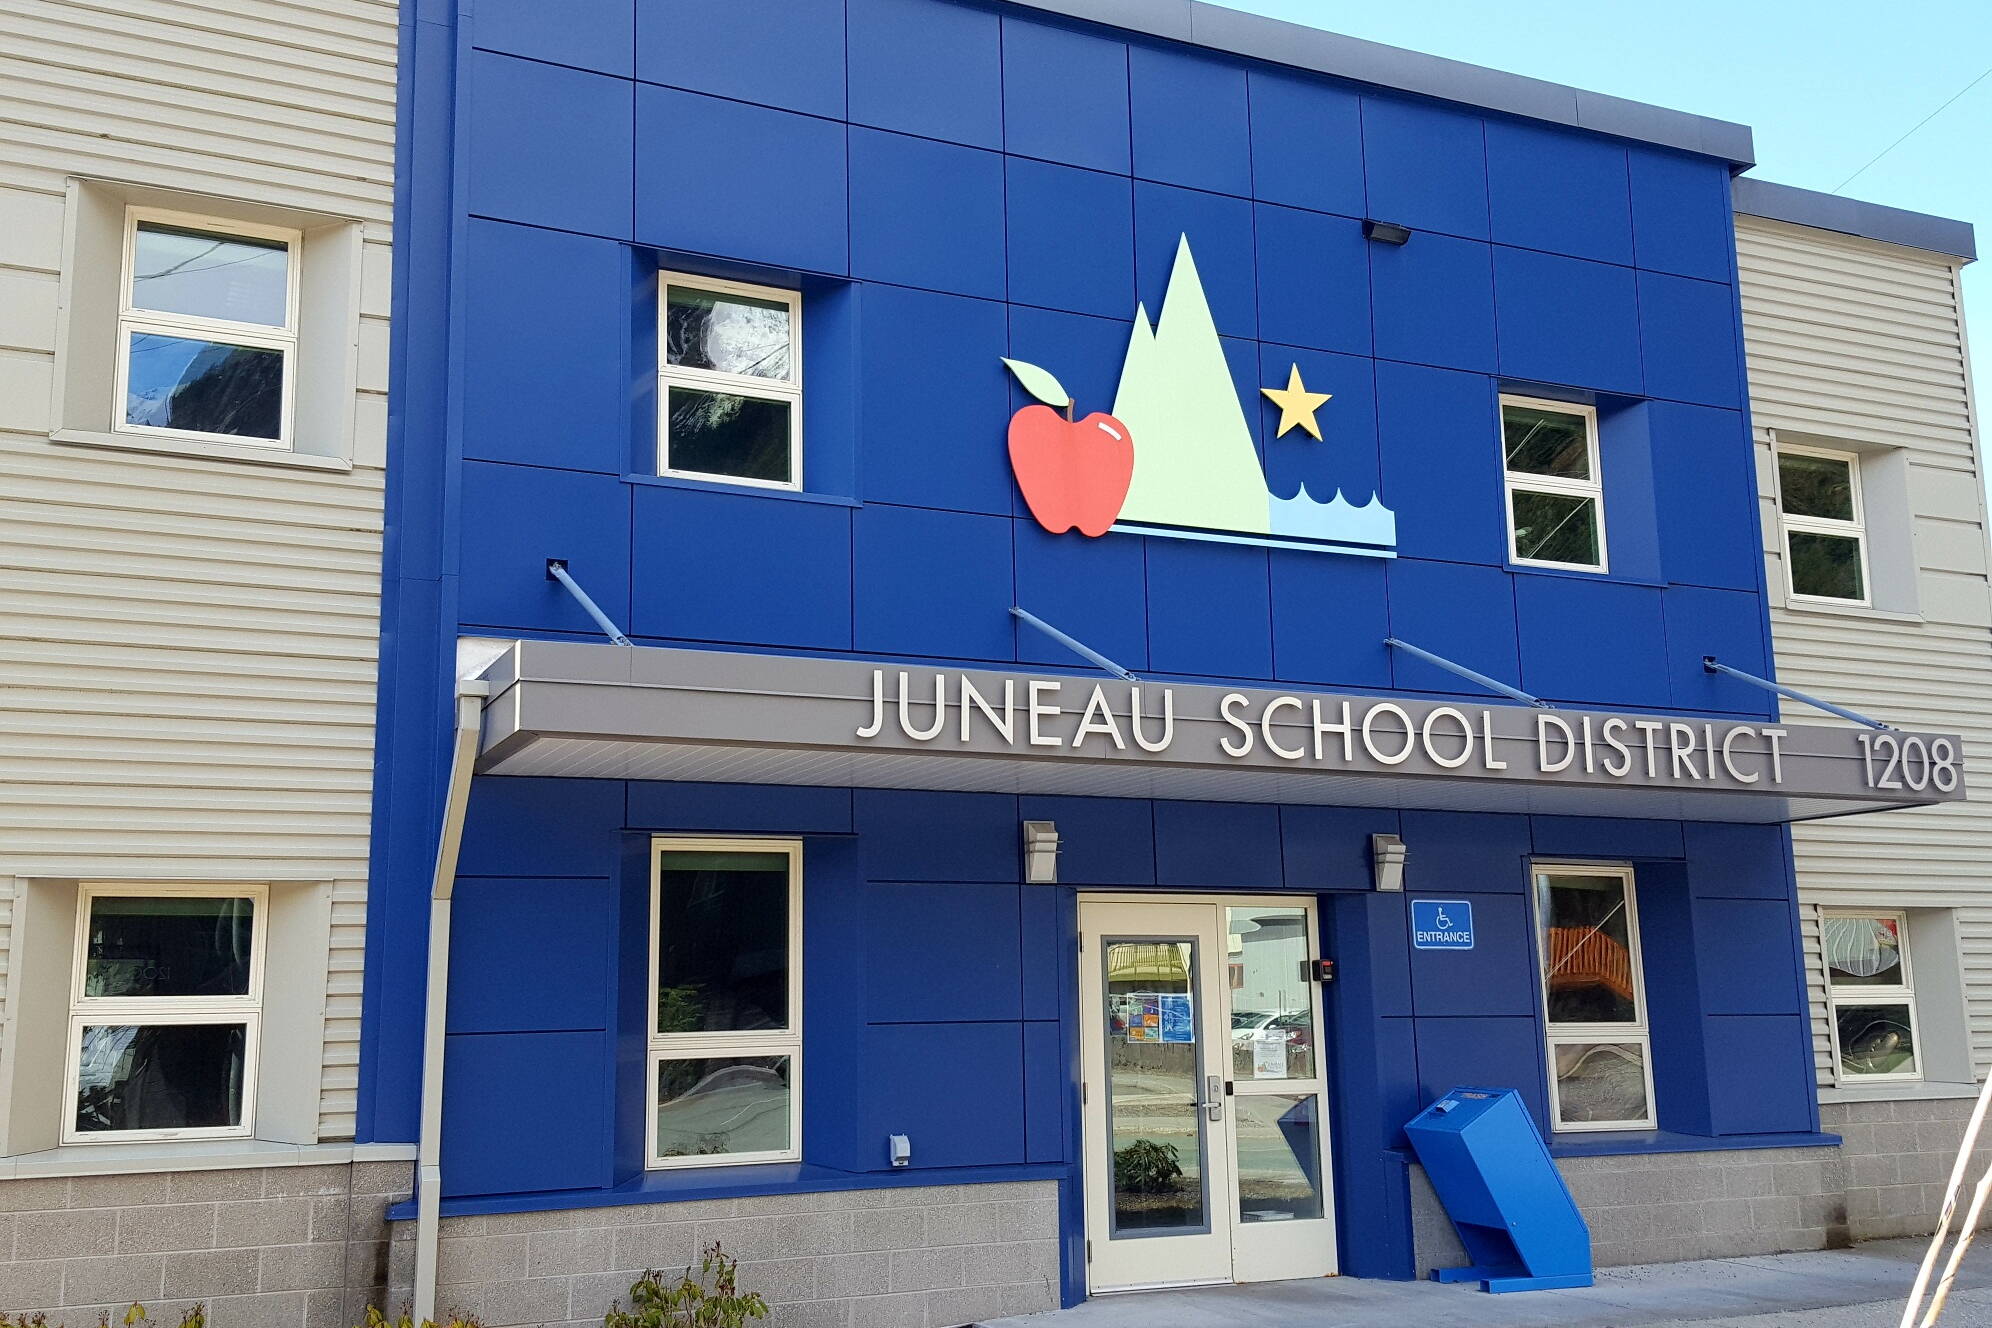 (City and Borough of Juneau photo)